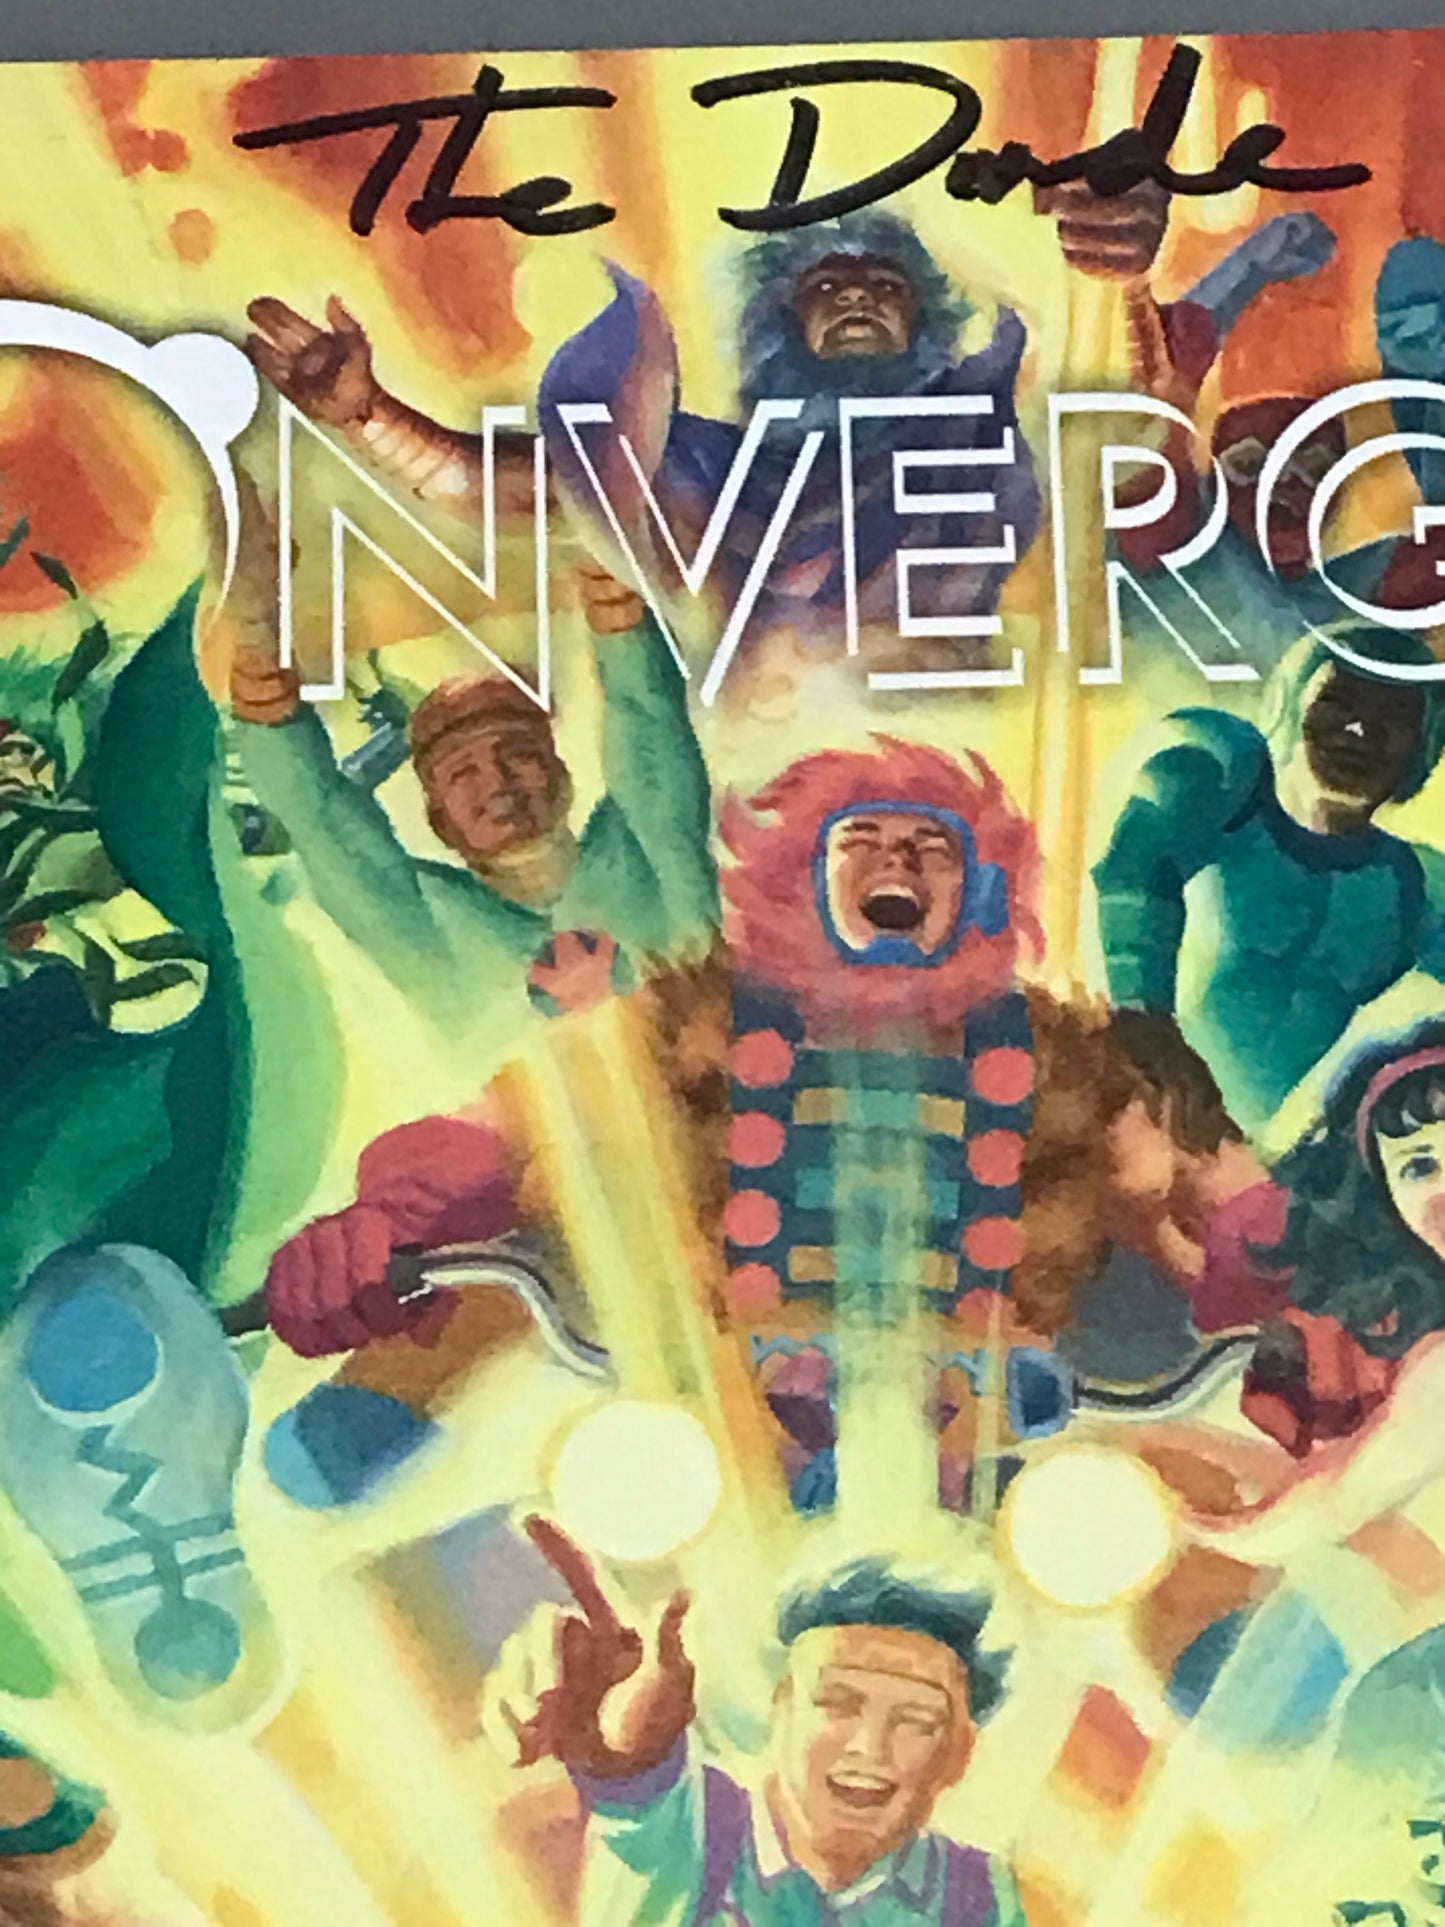 Convergence #6 DC Comics-Signed